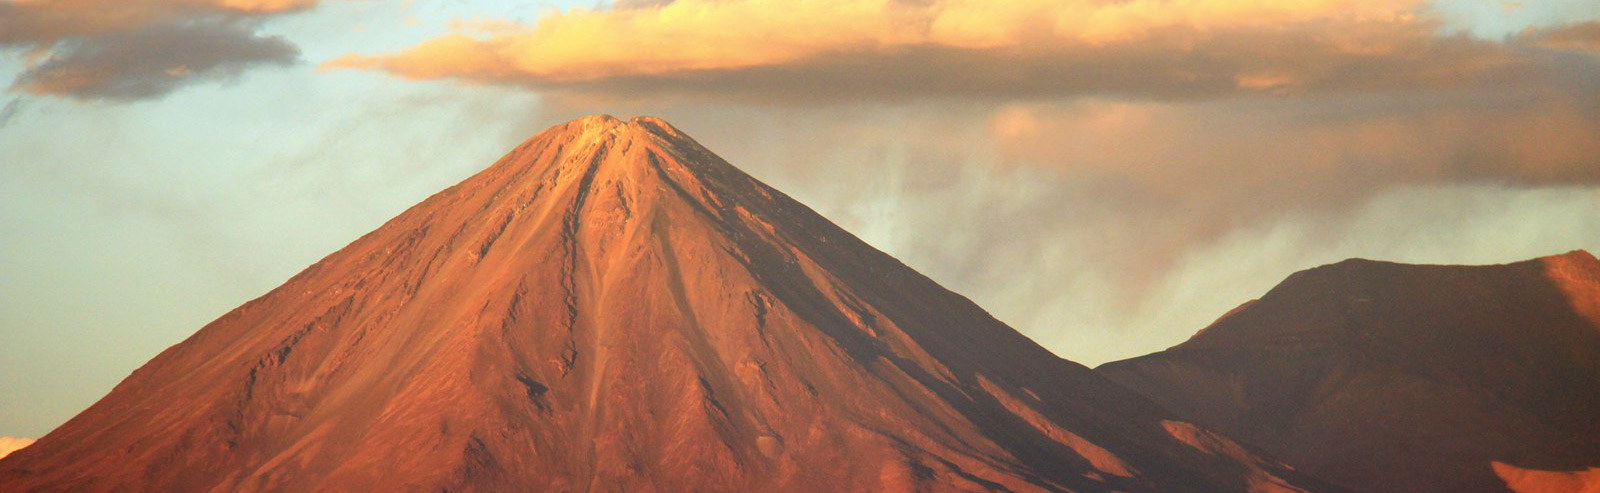 Volcán Licancabur towers over the Atacama Desert. Photo credit Krheesy, Flickr.